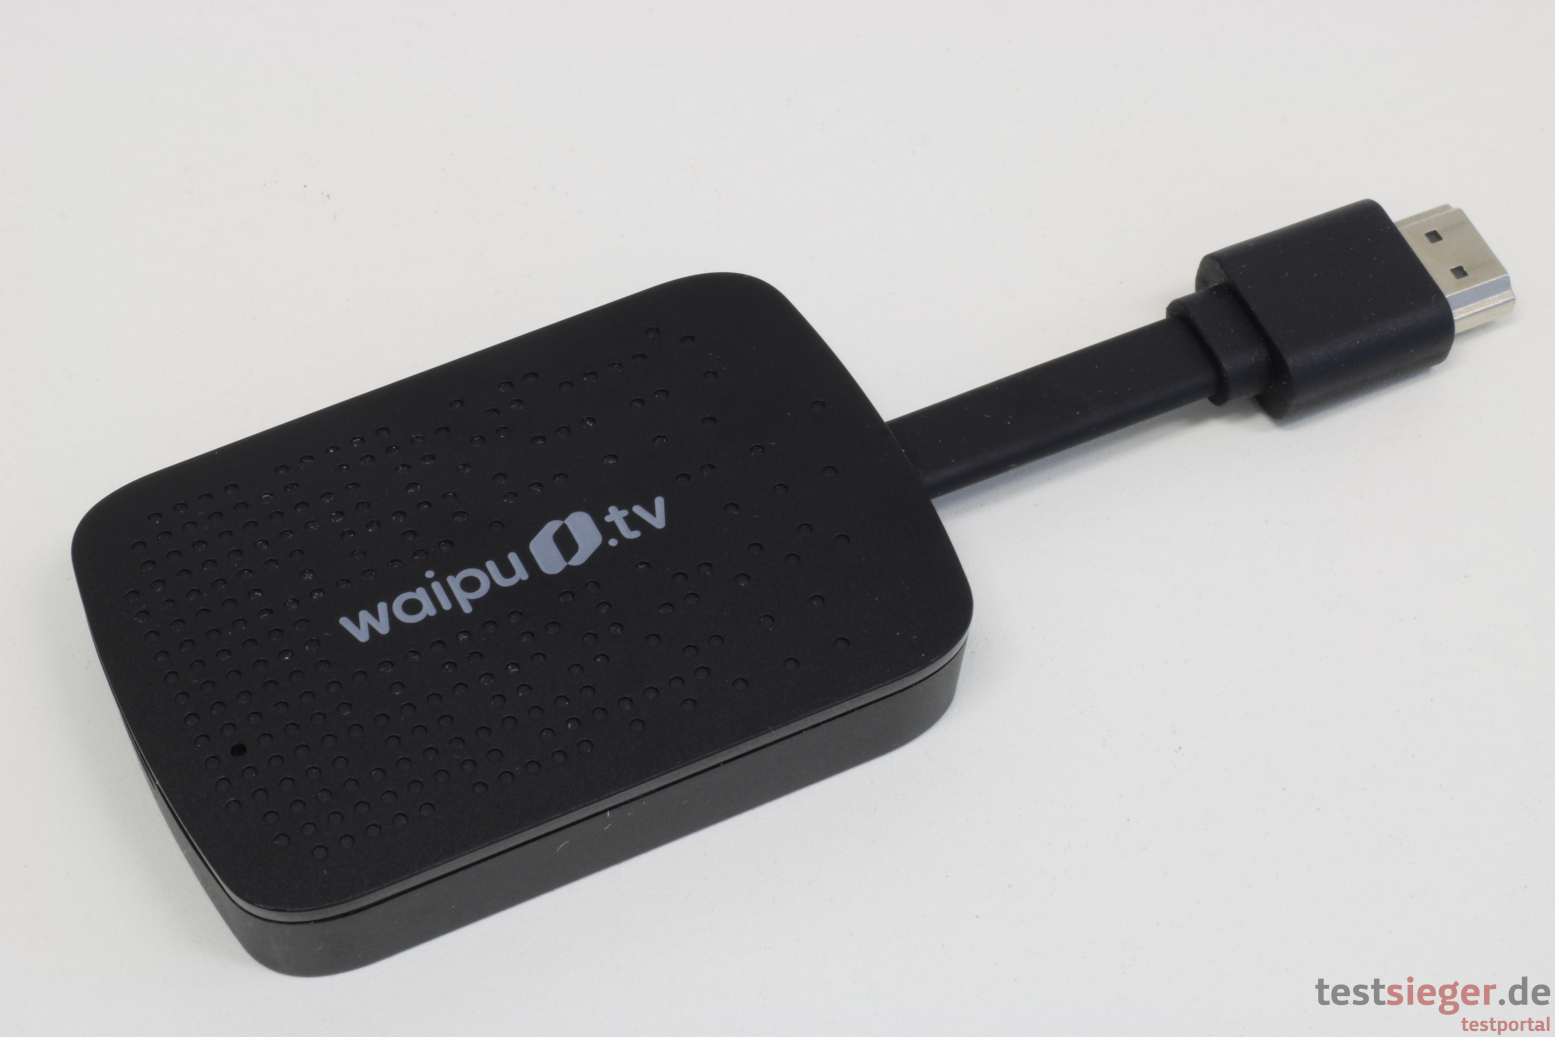 waipu.tv 4K Stick Streaming-Player im Test